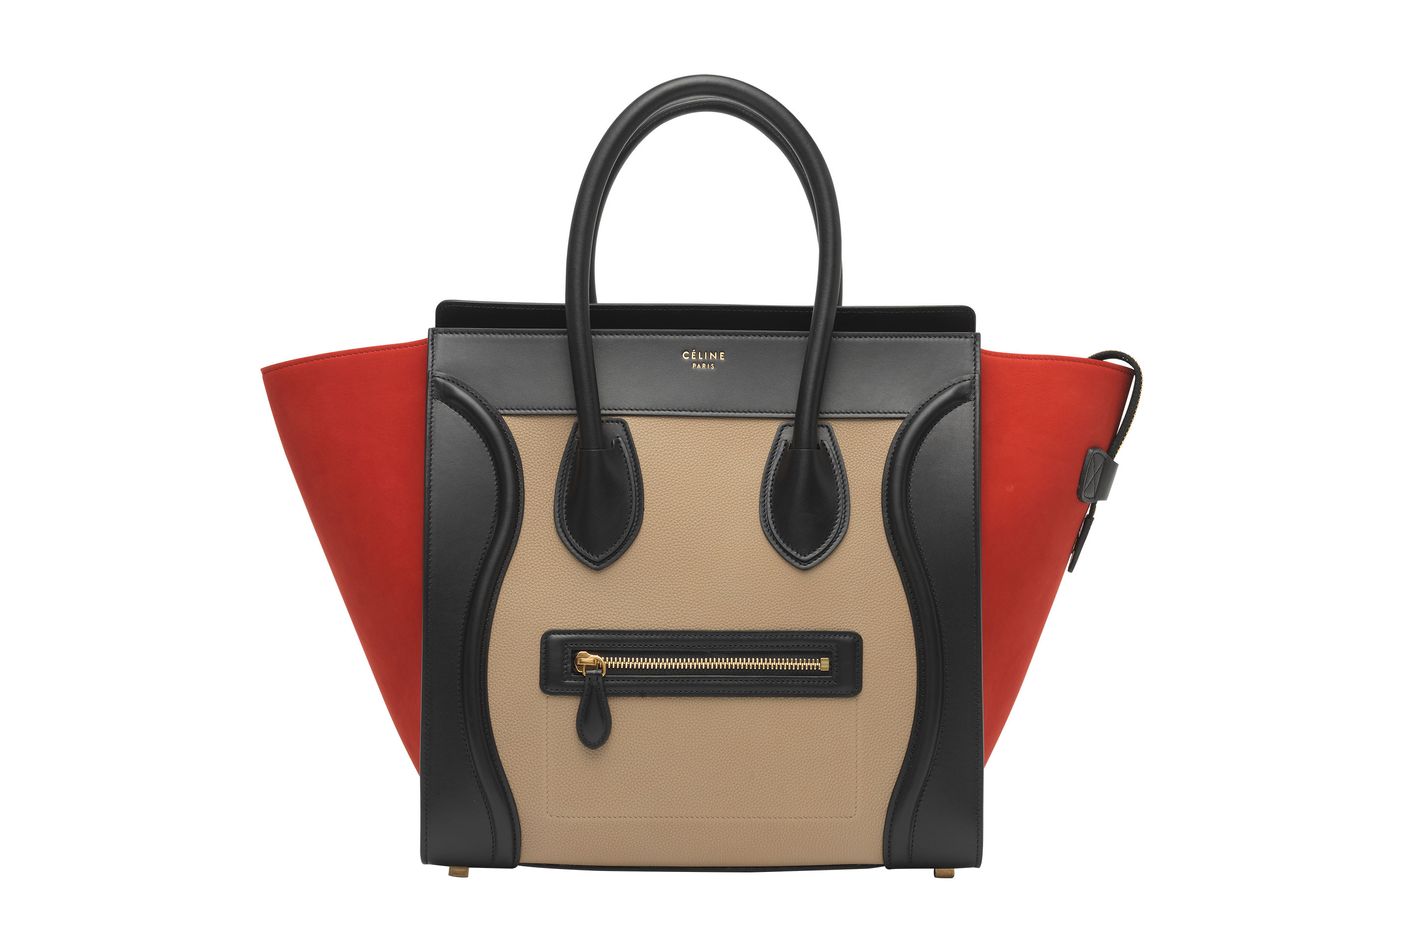 Yes, Céline’s Luggage Bag Is Still Worth the Splurge